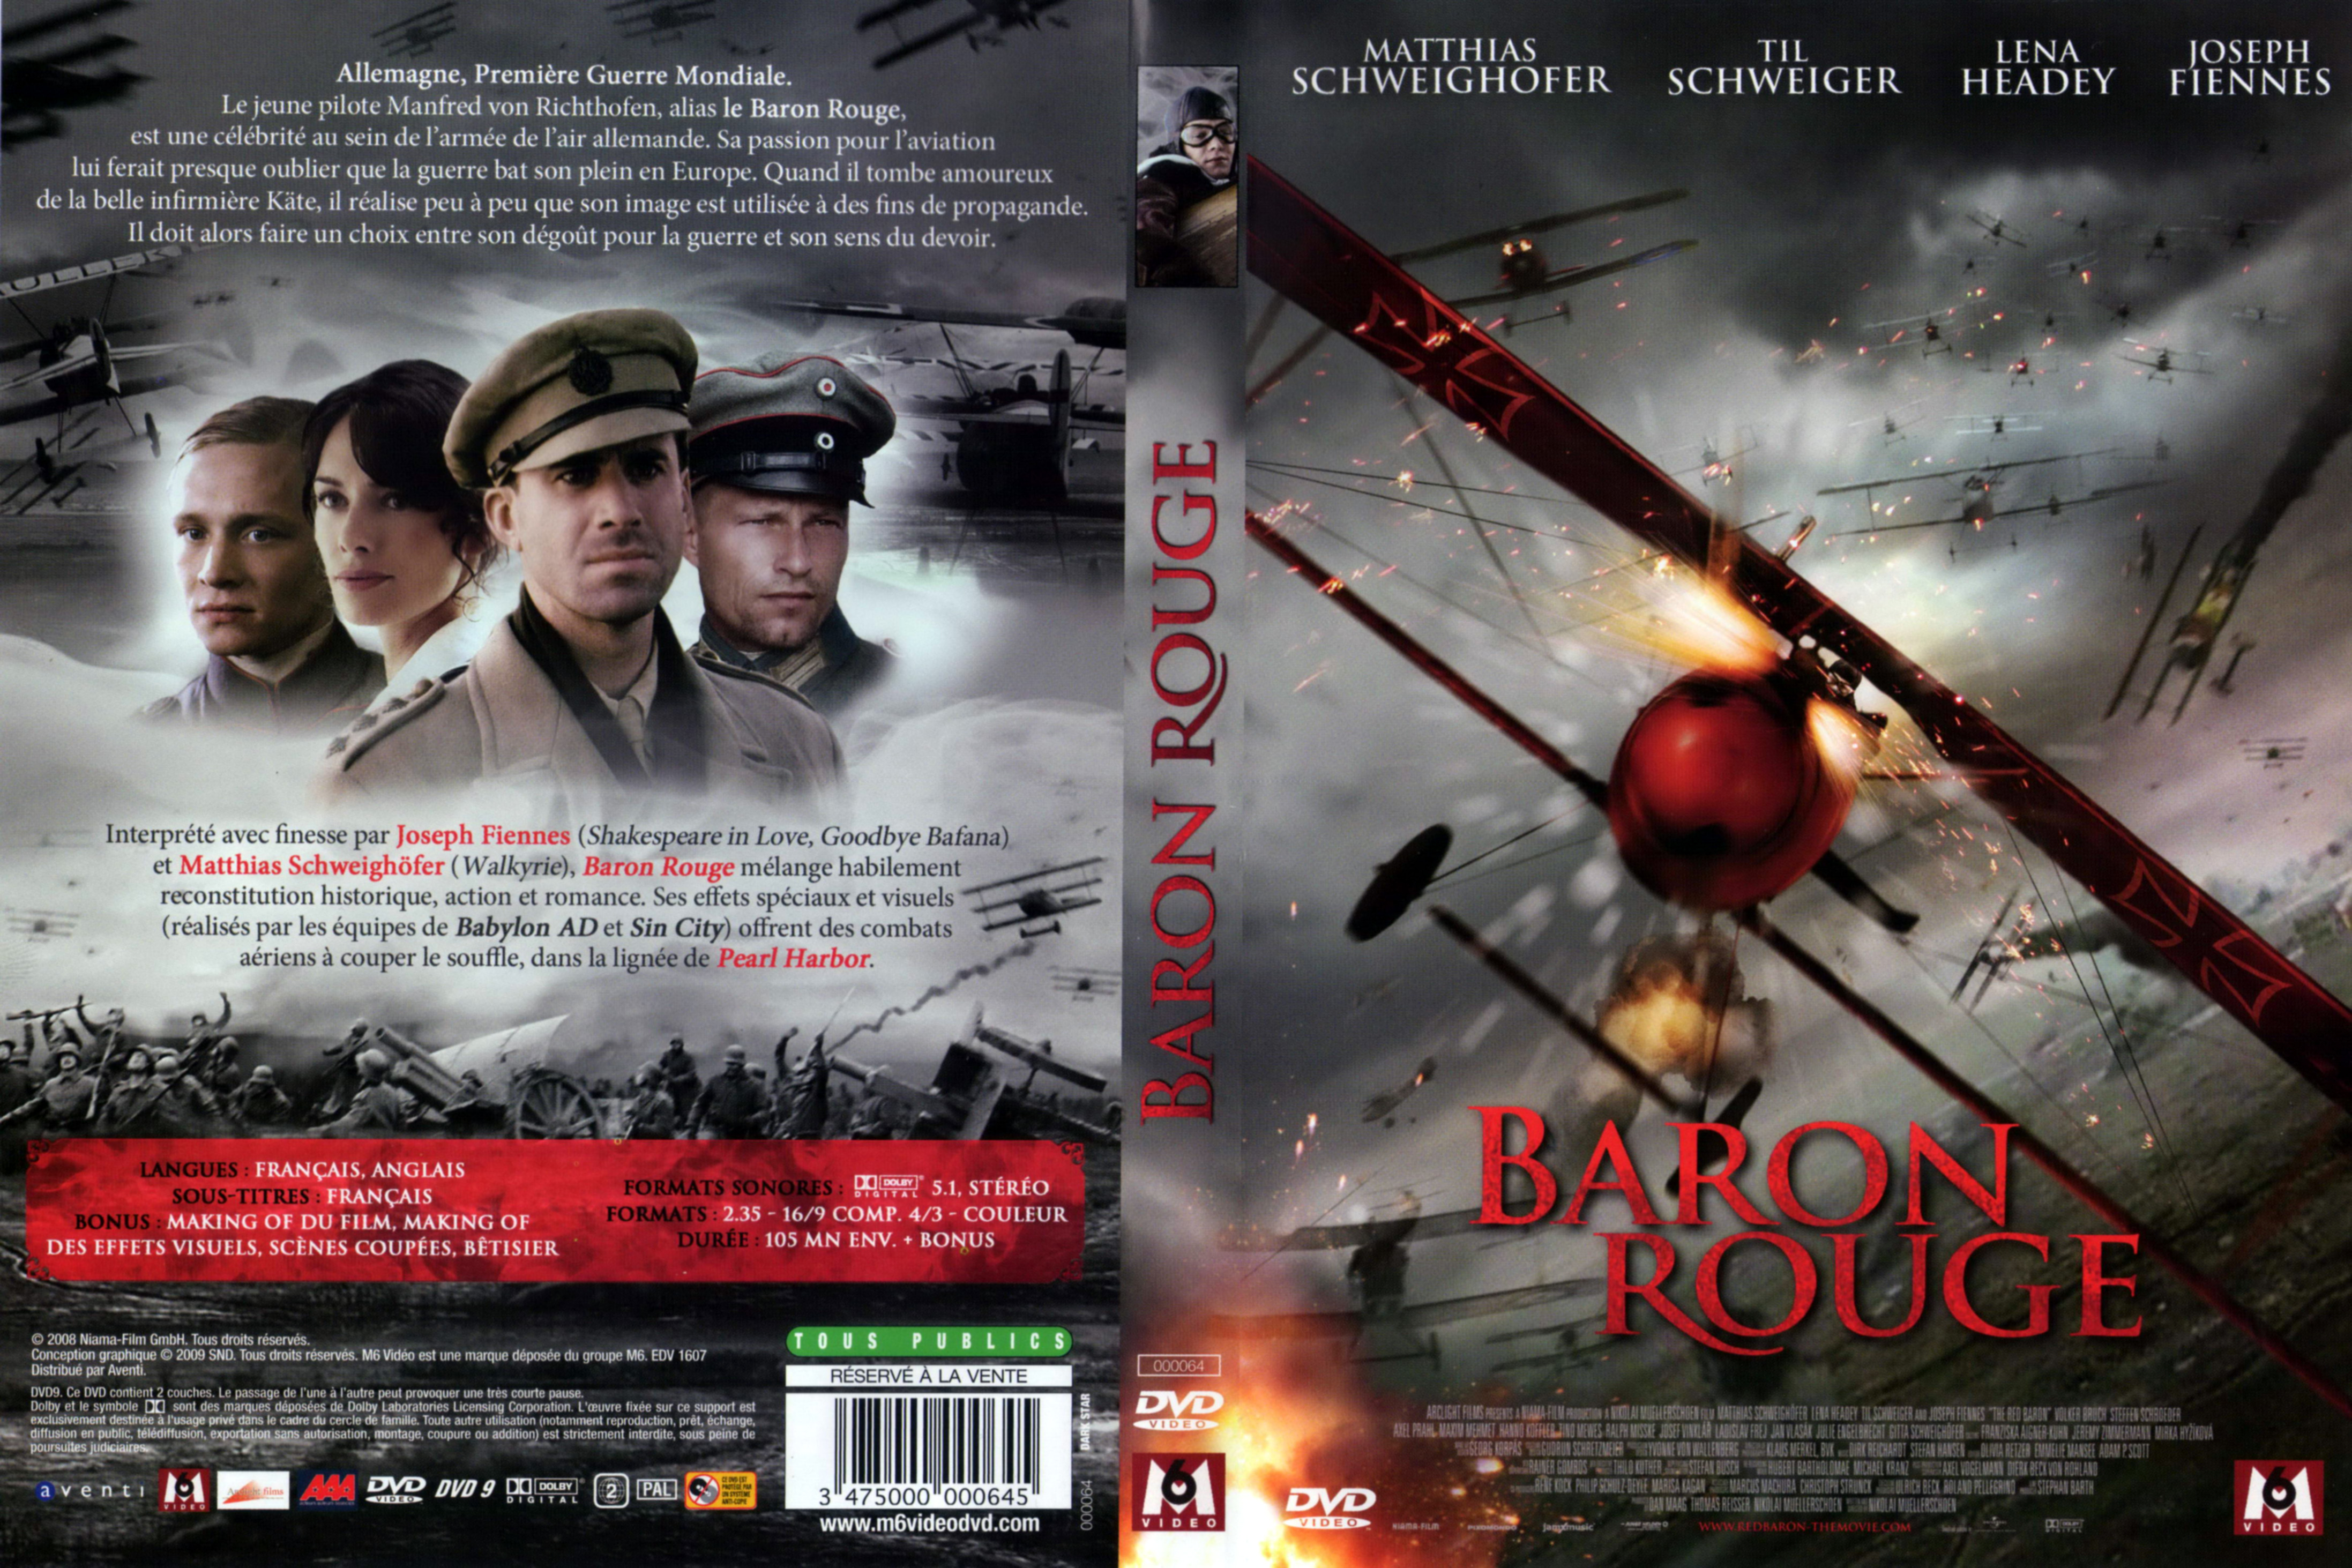 Jaquette DVD Baron rouge